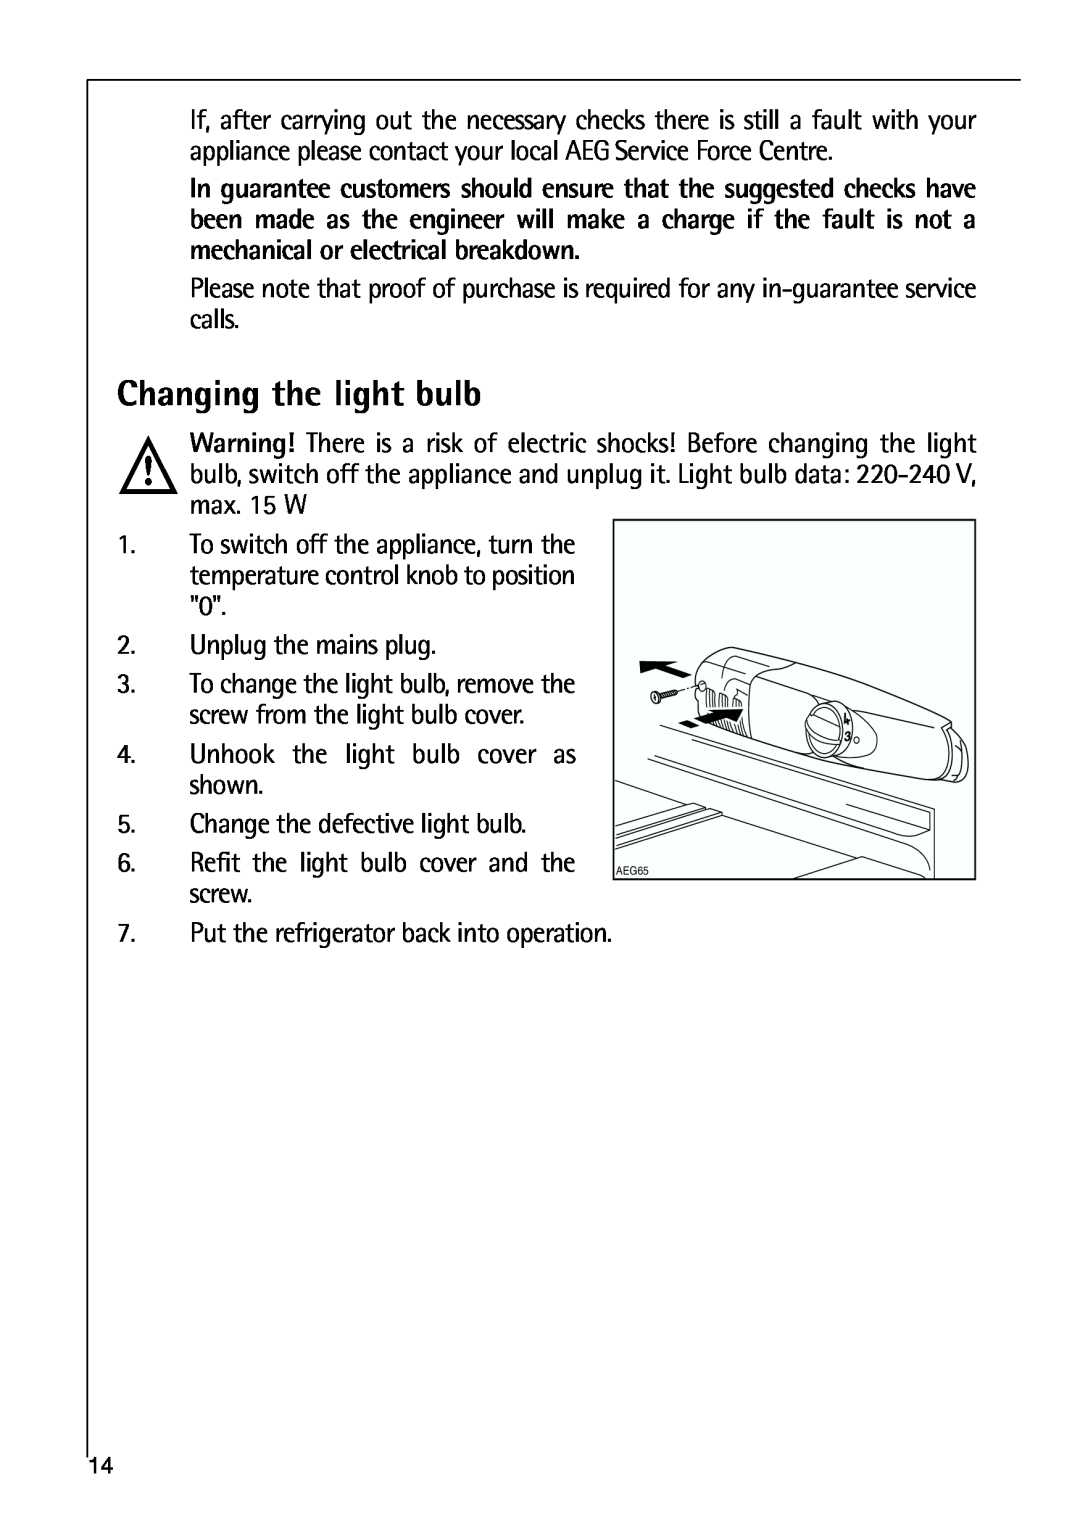 Parkinson Cowan SANTO K 40-5i, SANTO K 9, SANTO K 18 user manual Changing the light bulb 